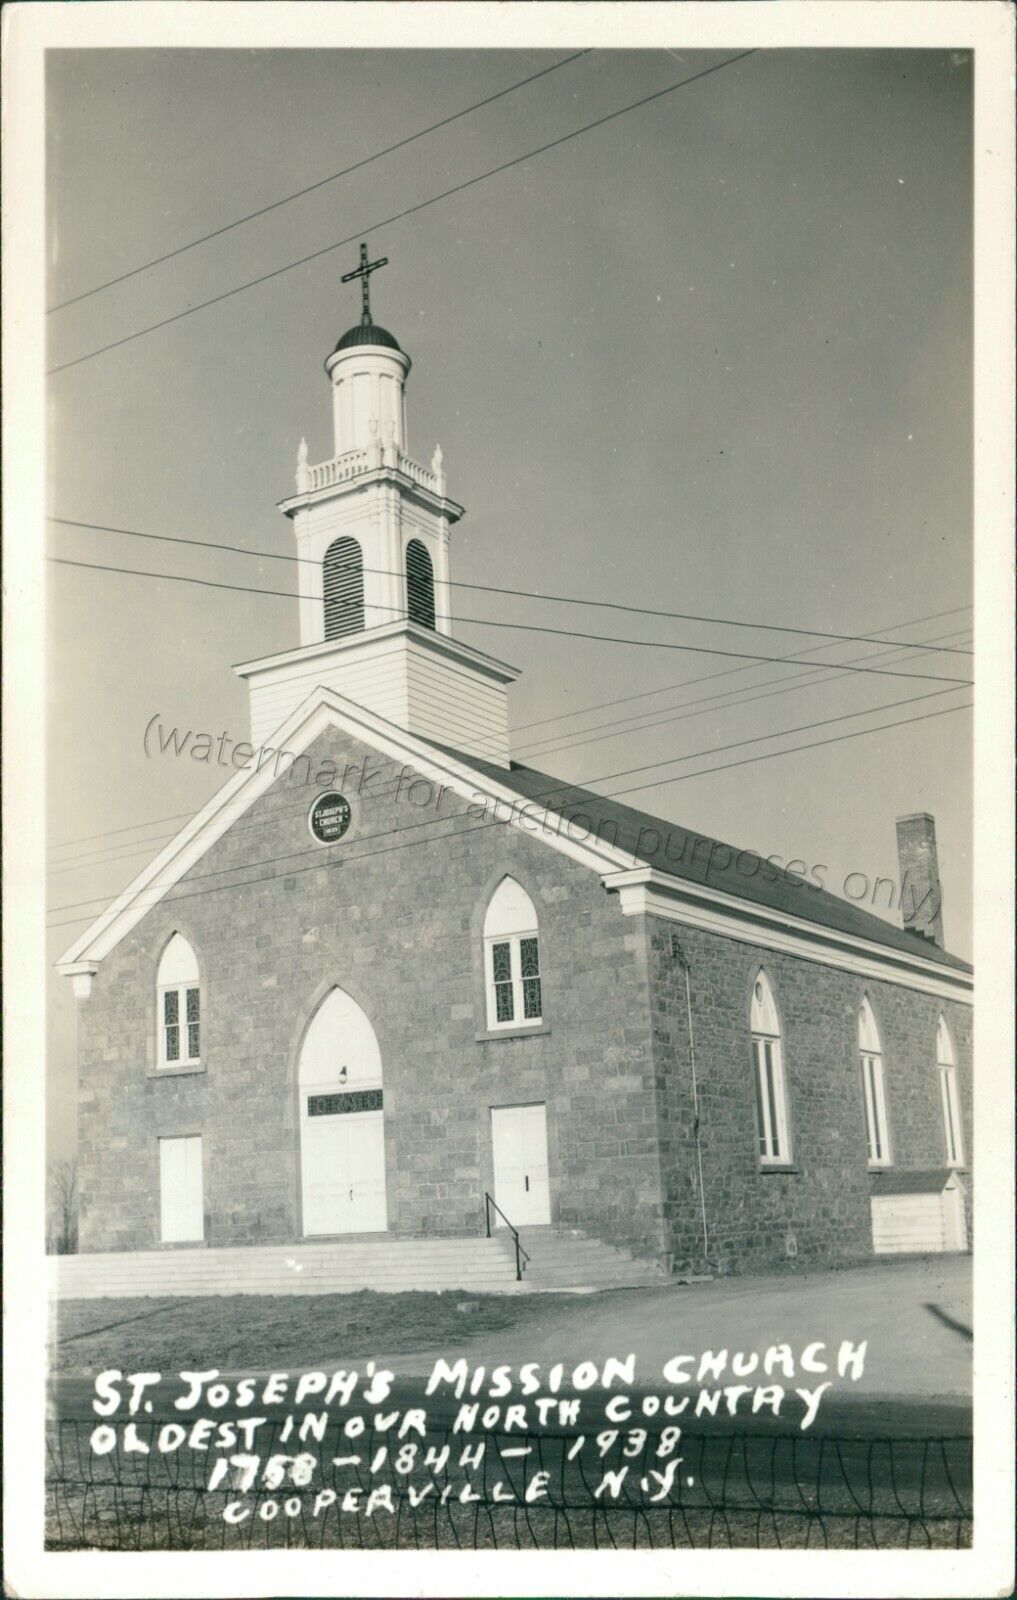 Cooperville, New York - St. Joseph\'s Church 1907 - Clinton Co, photo NY Postcard